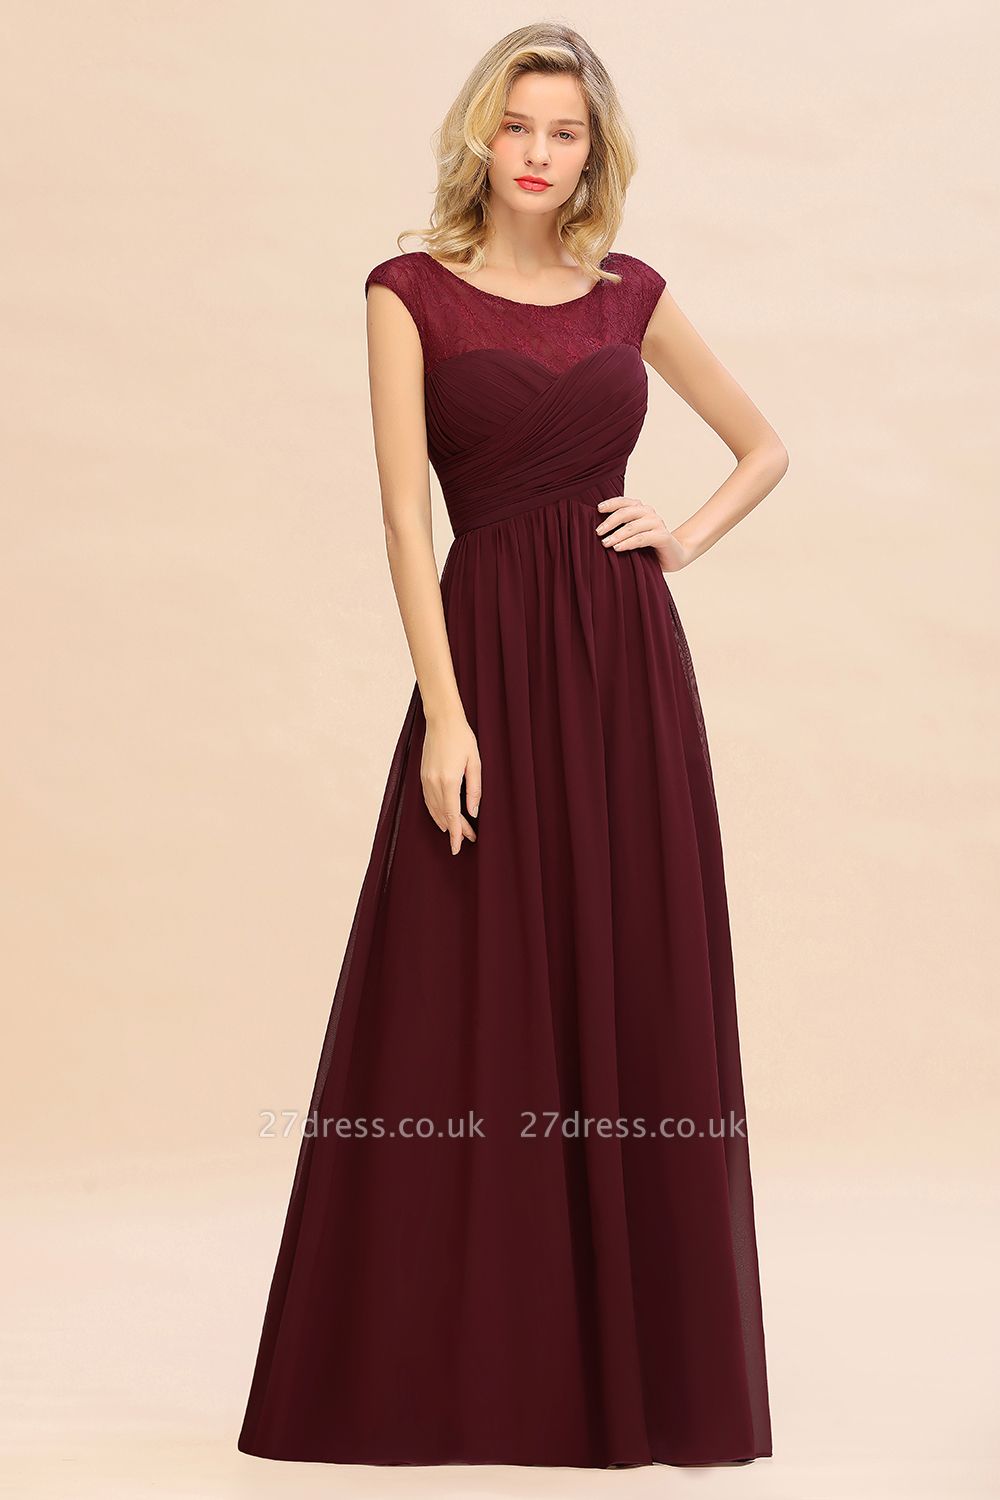 Elegant Burgundy Jewel Neck Chiffon Long Bridesmaid Dress